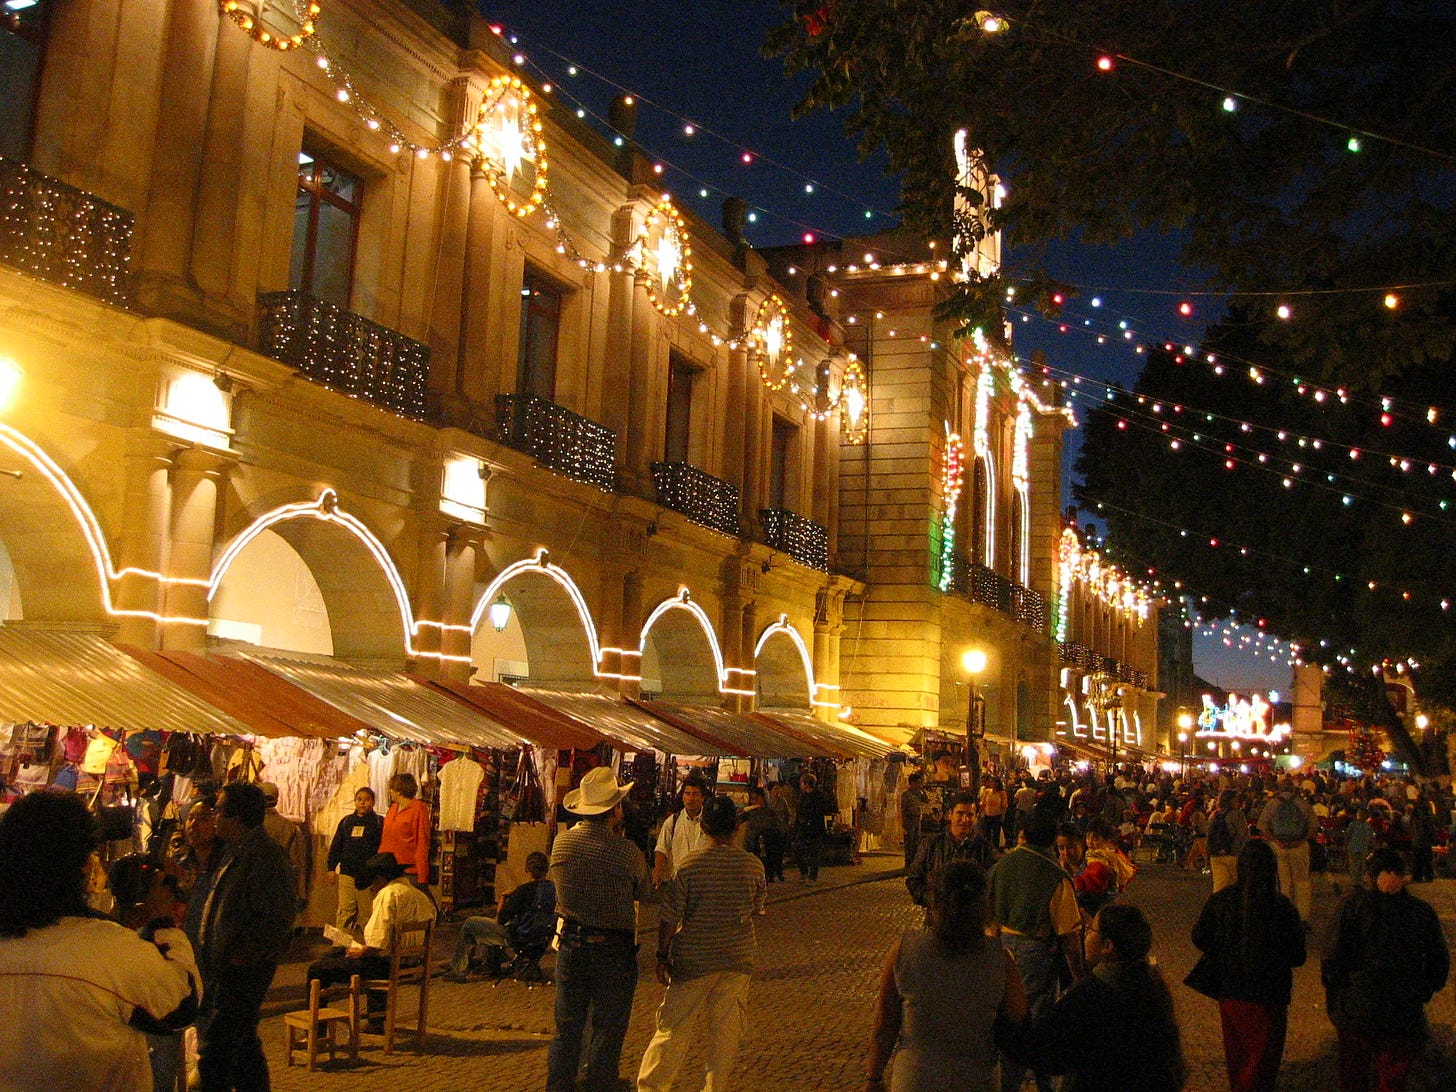 Oaxaca at night during Christmas